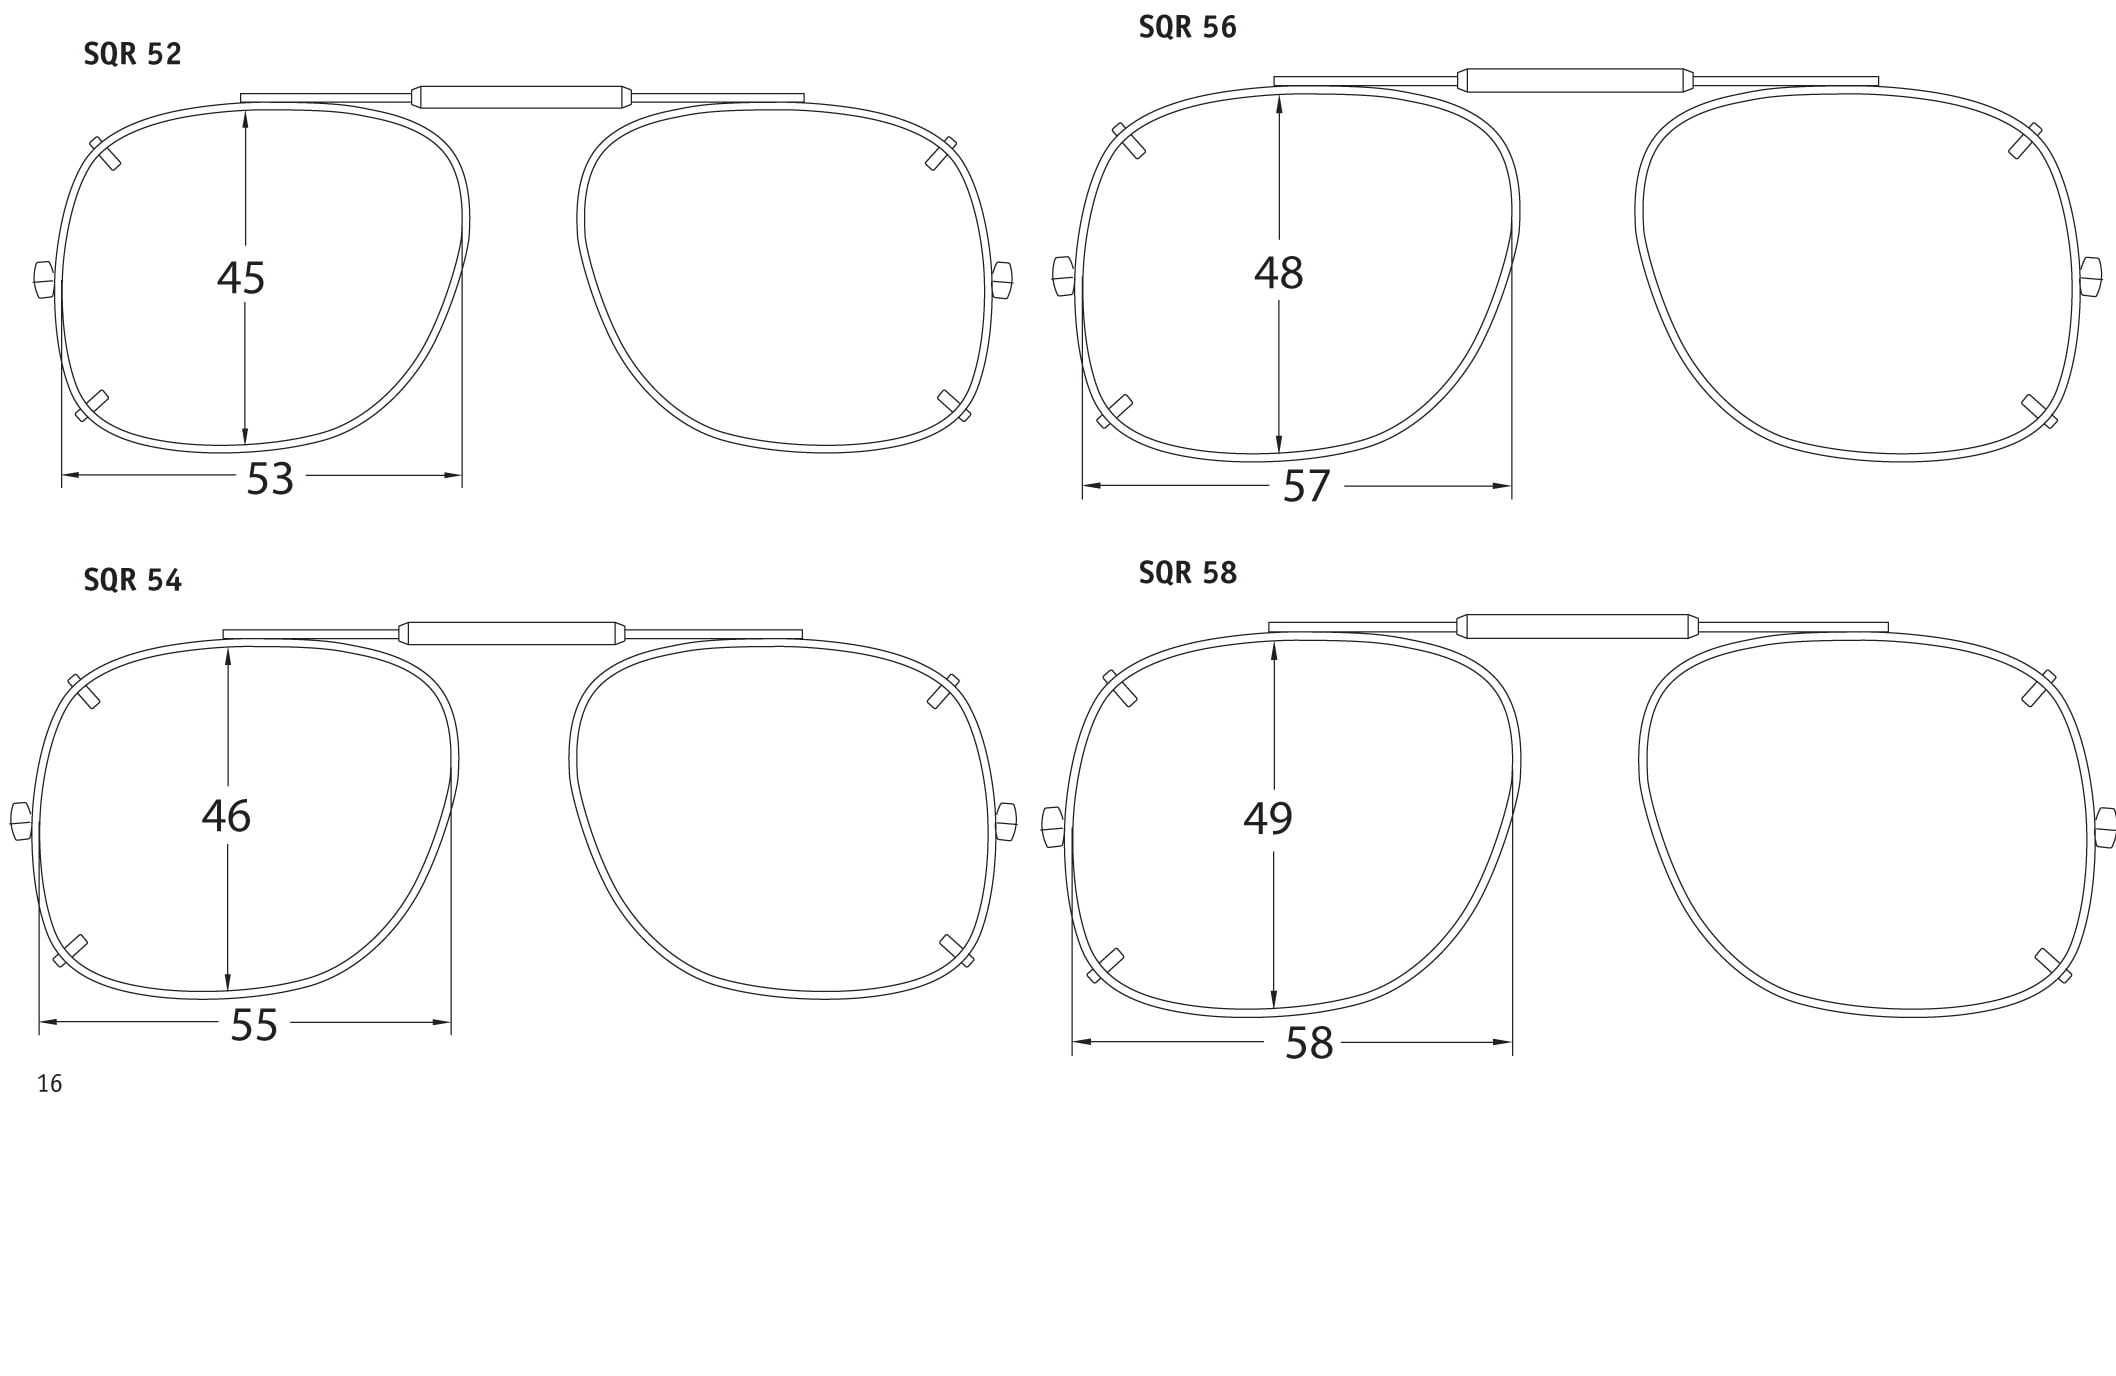 Visionaries Polarized Clip on Sunglasses Square Bronze Frame 57 x 48 Eye